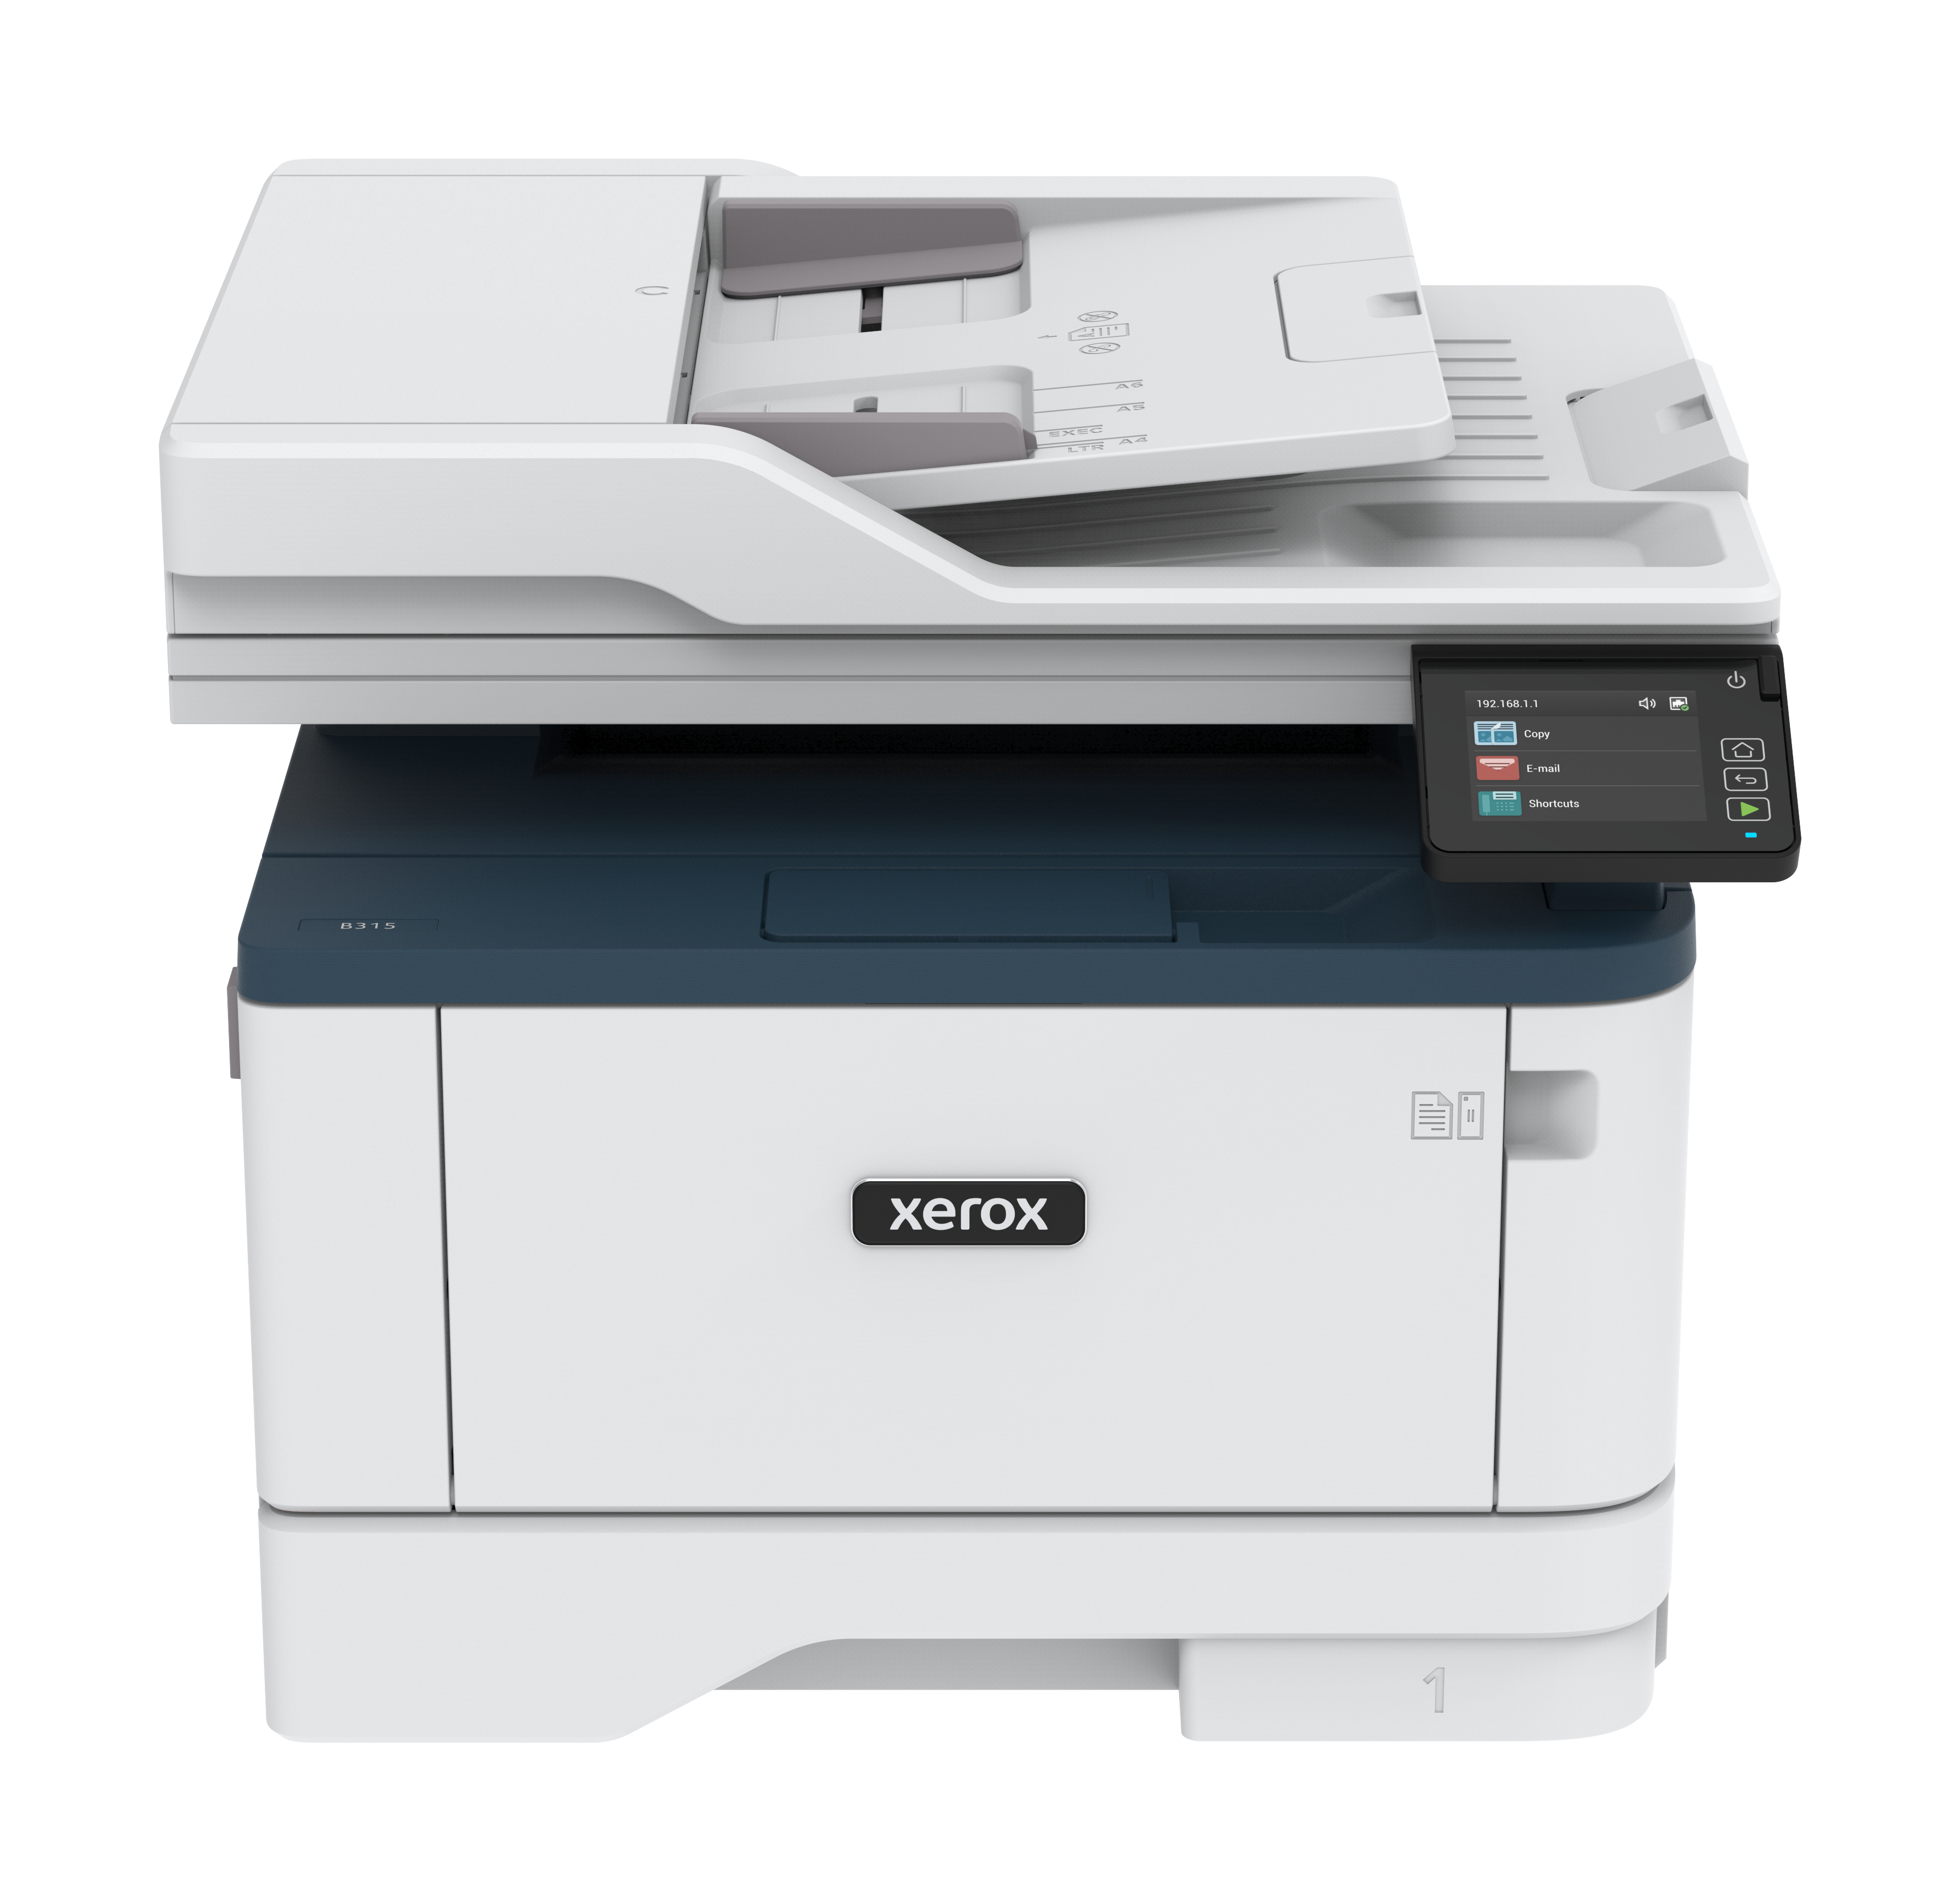 Xerox B315 A4 40 ppm trådlös dubbelkopiering/utskrift/scanning/fax PS3 PCL5e/6 2 magasin 350 ark